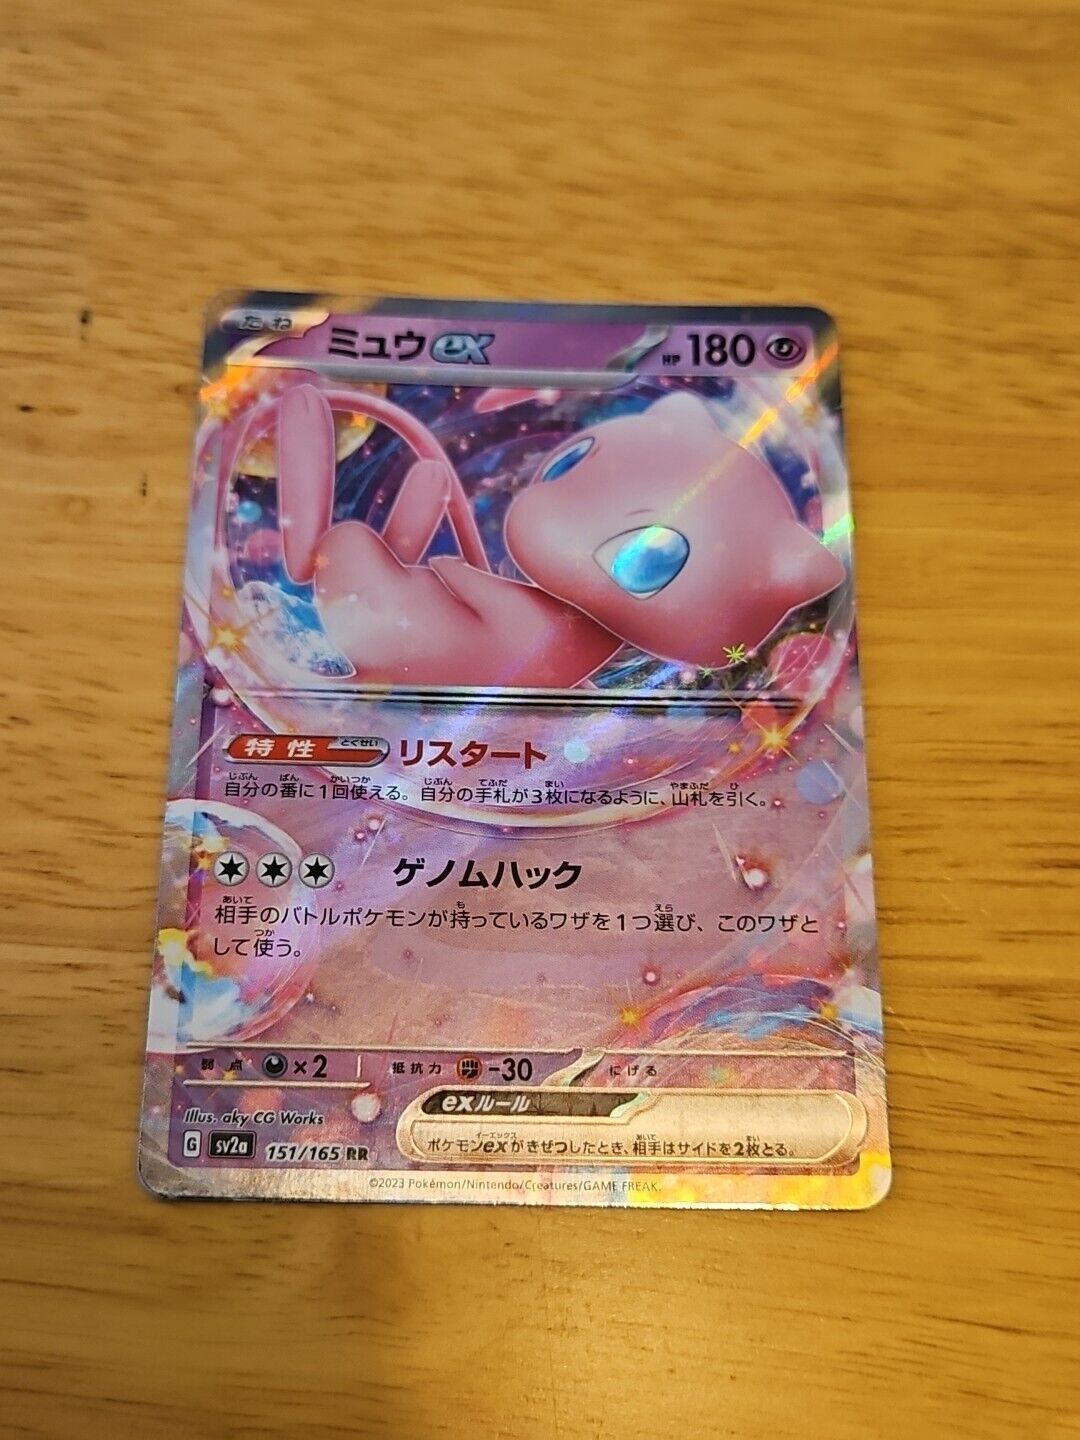 Mew ex 151/165 sv2a Pokemon 151 Japanese Pokemon Card